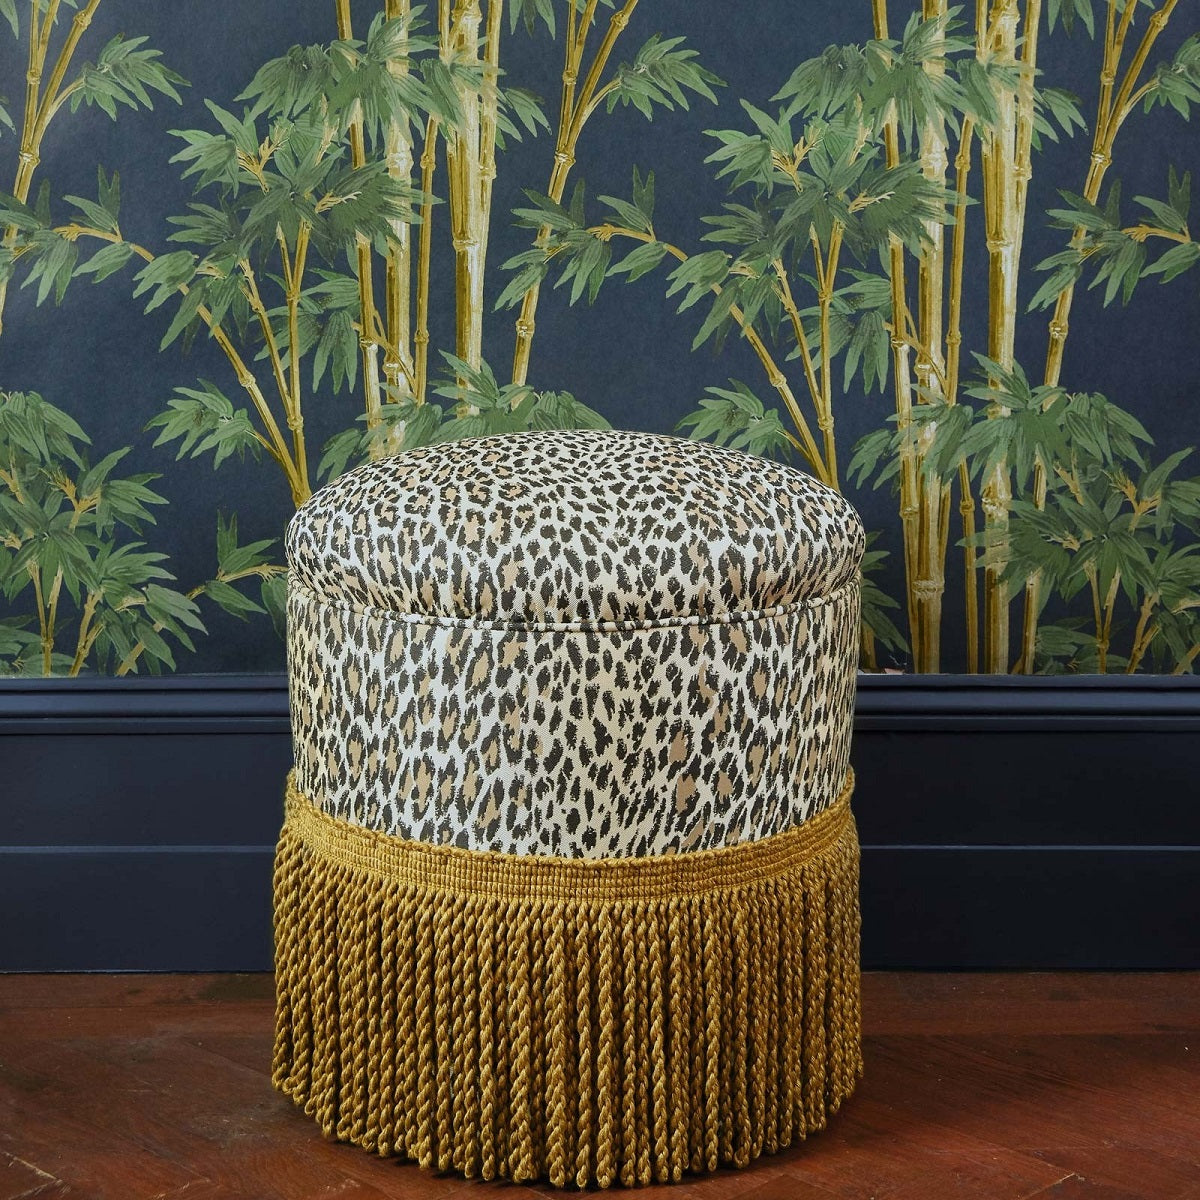 Bambusa Table Lamp – Walnut Wallpaper